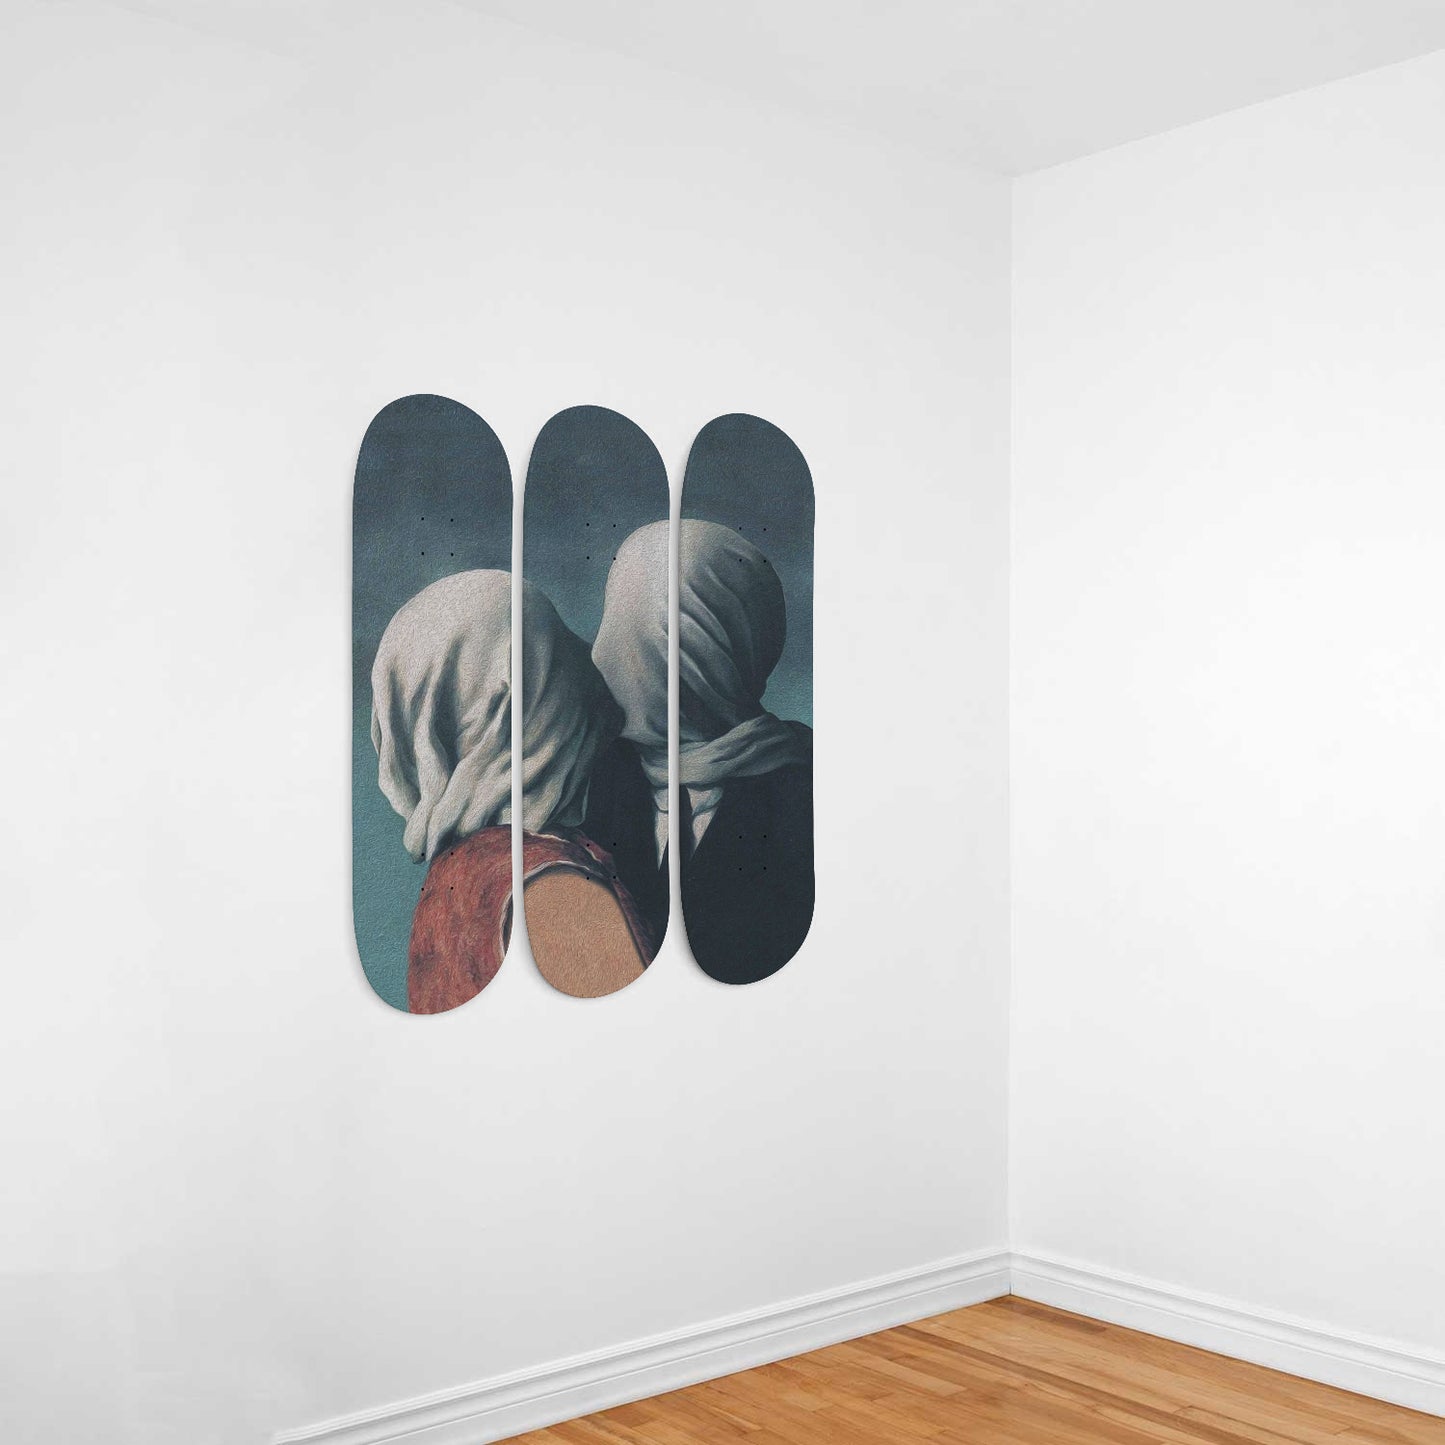 René Magritte - The Lovers II Painting - 3-piece Skateboard Wall Art